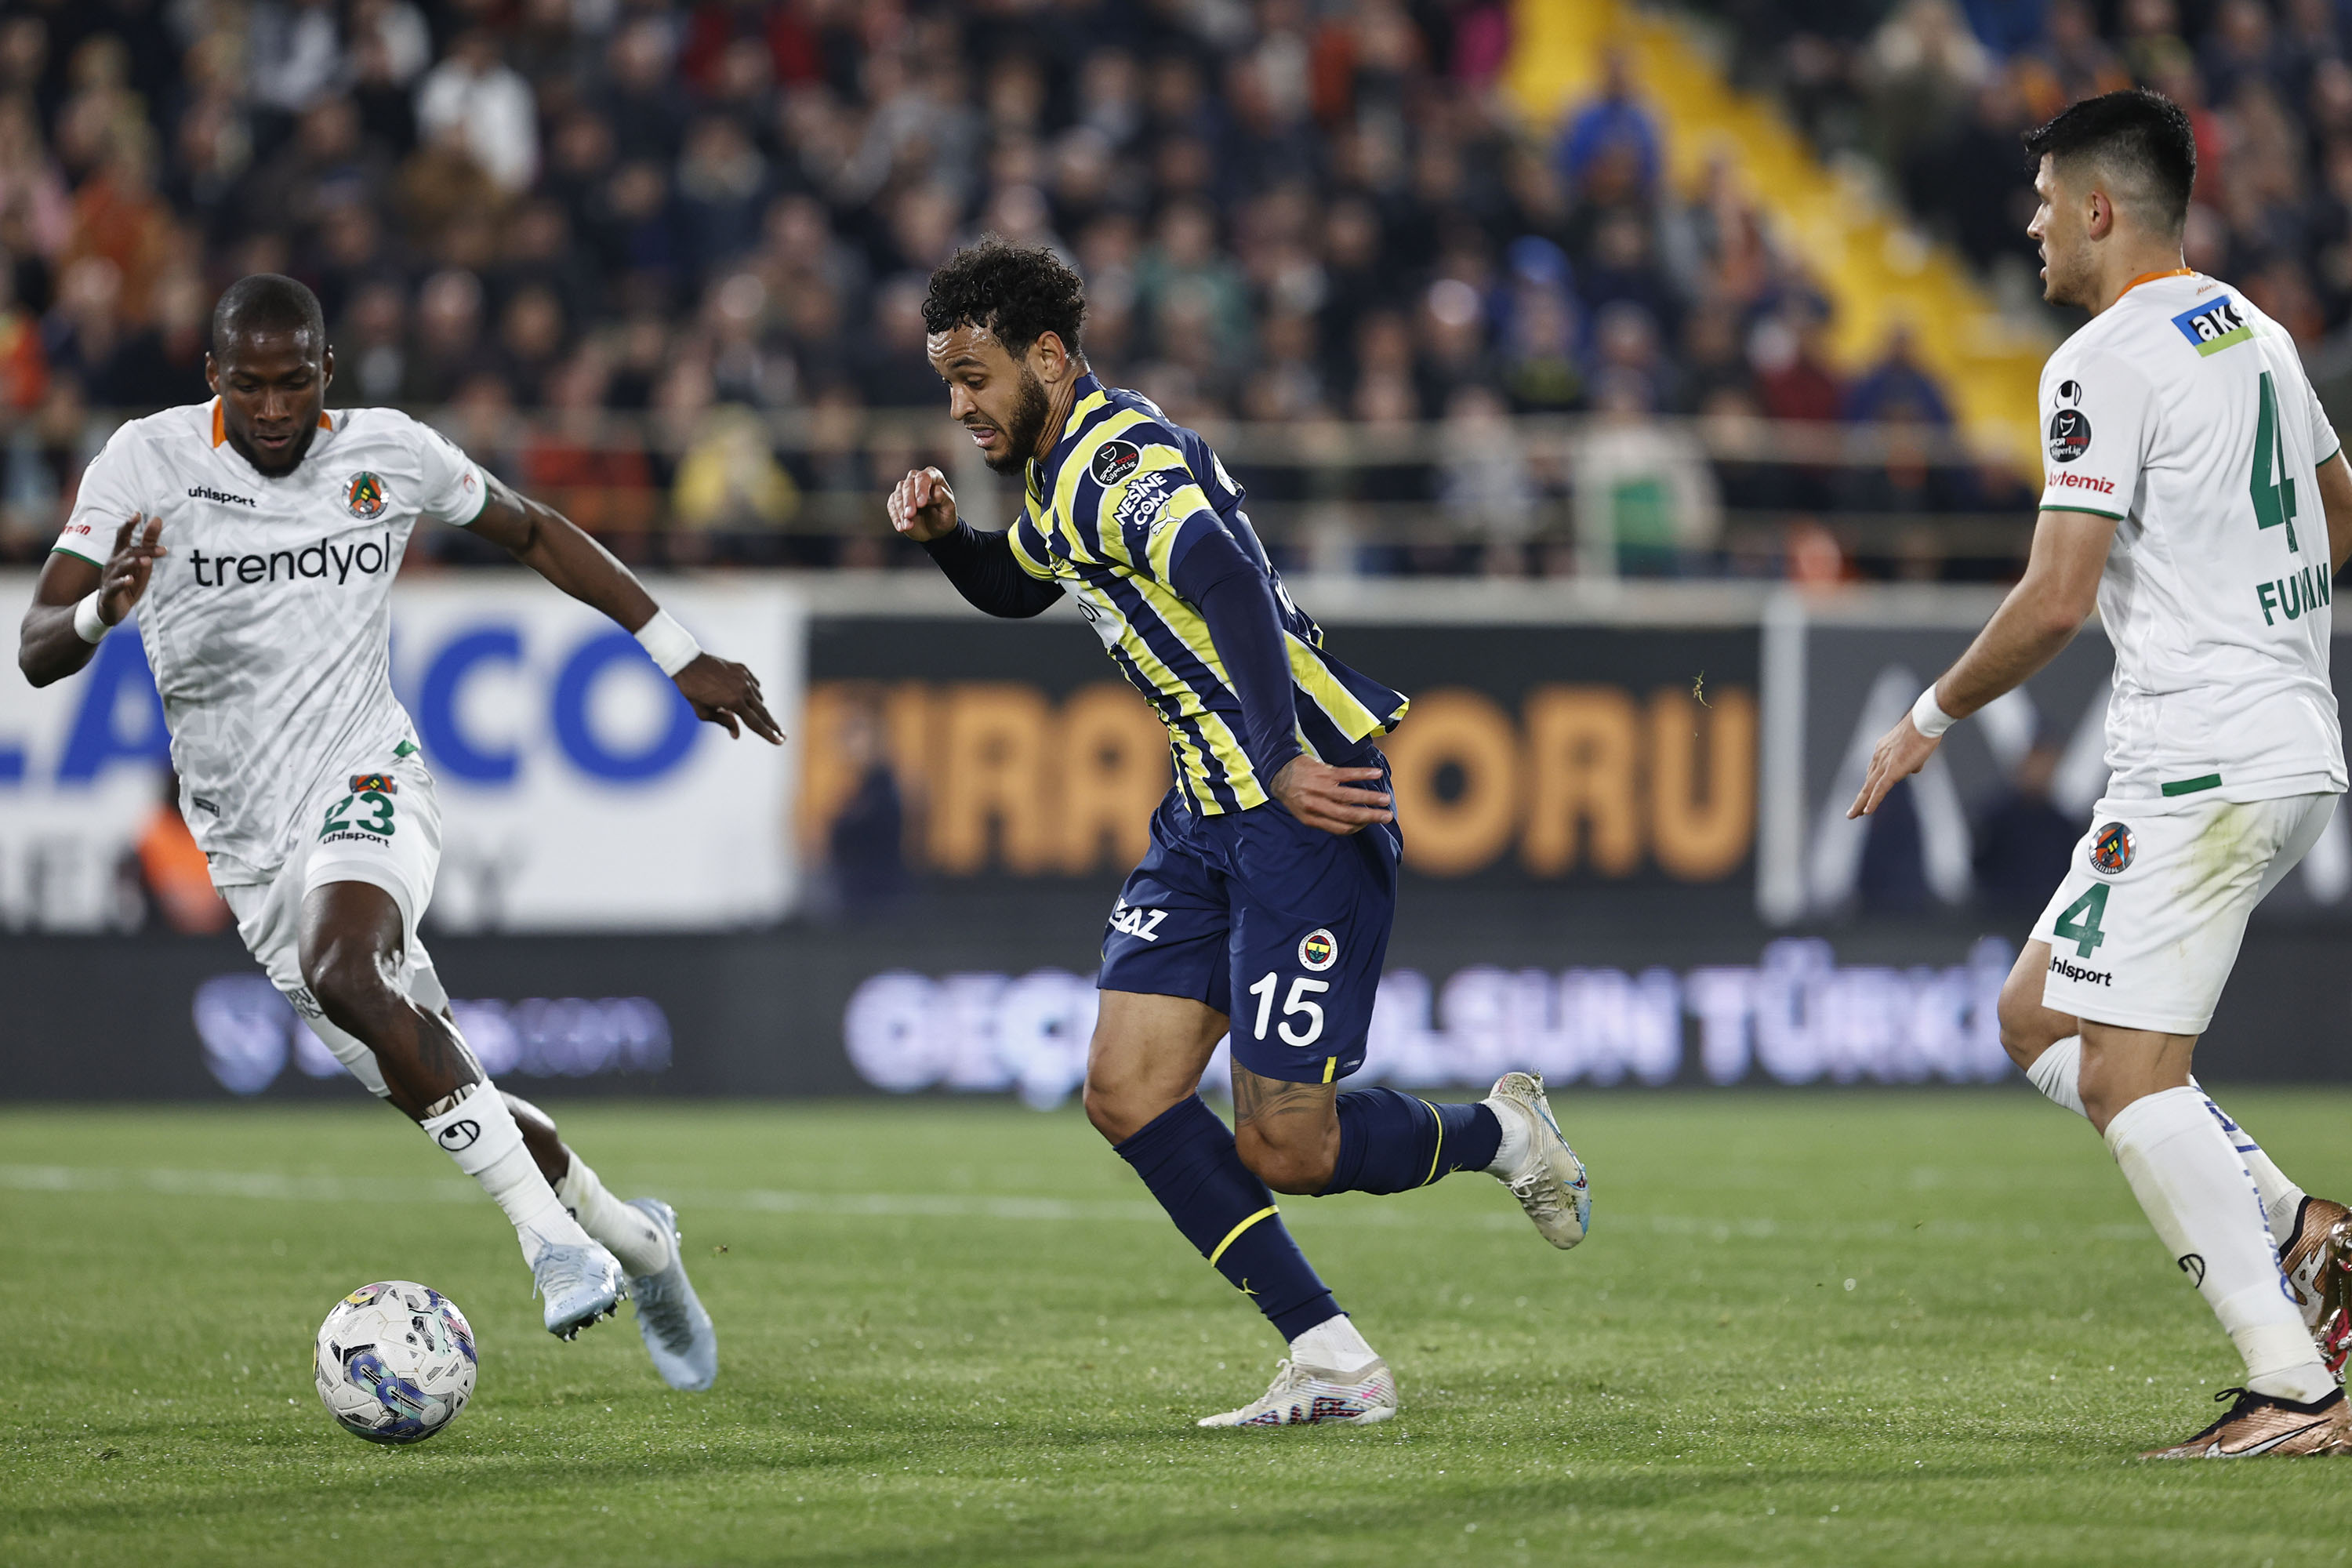 Corendon Alanyaspor 1-3 Fenerbahçe